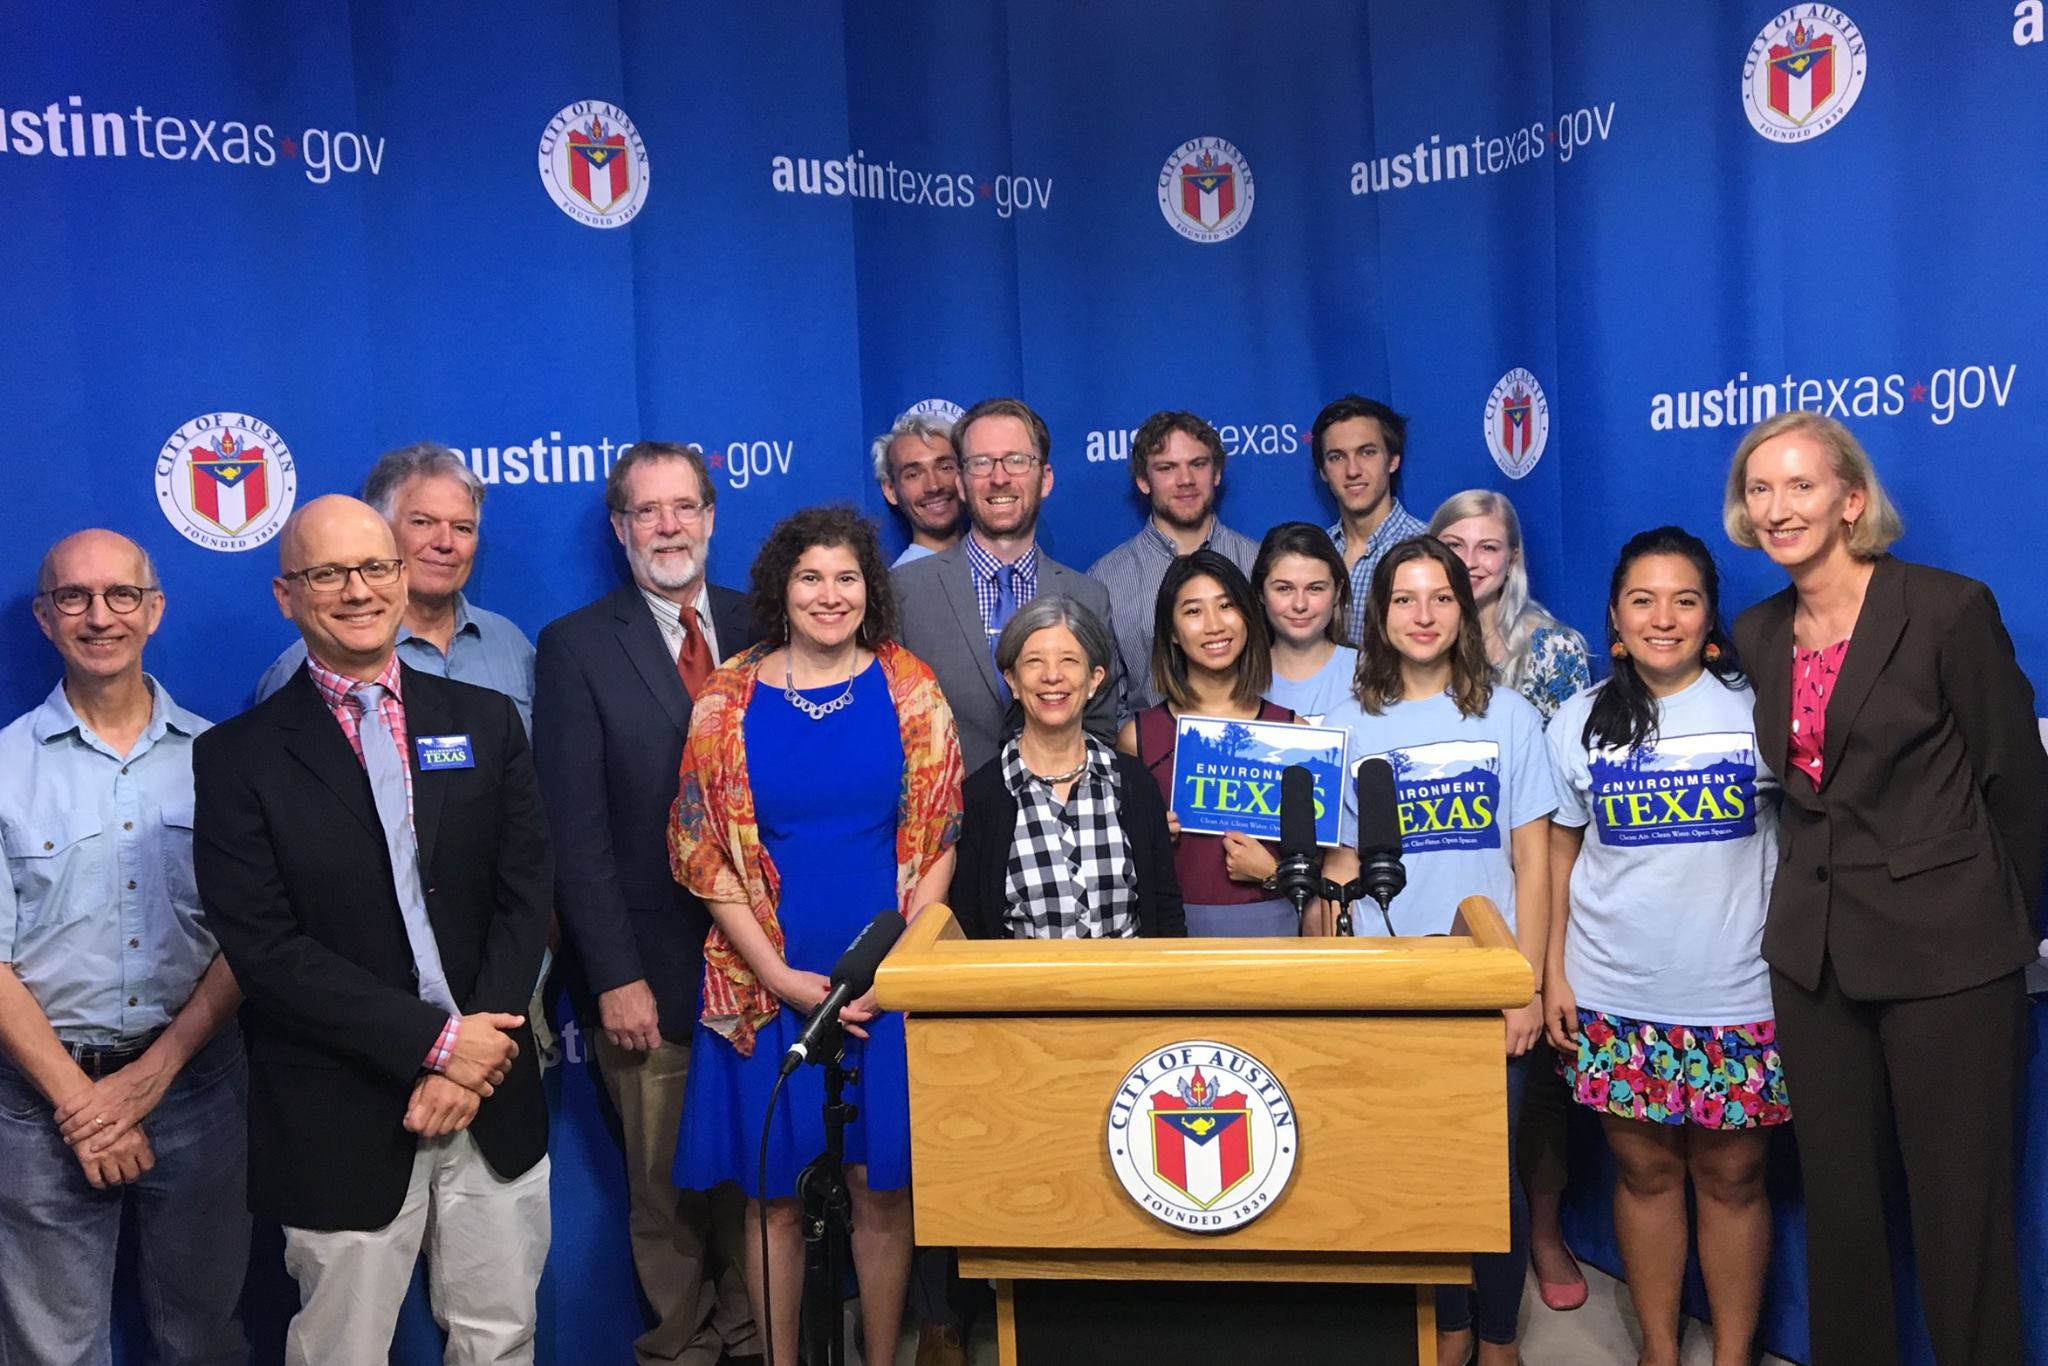 Group posing beside Austin TX podium and austintexas.gov banner